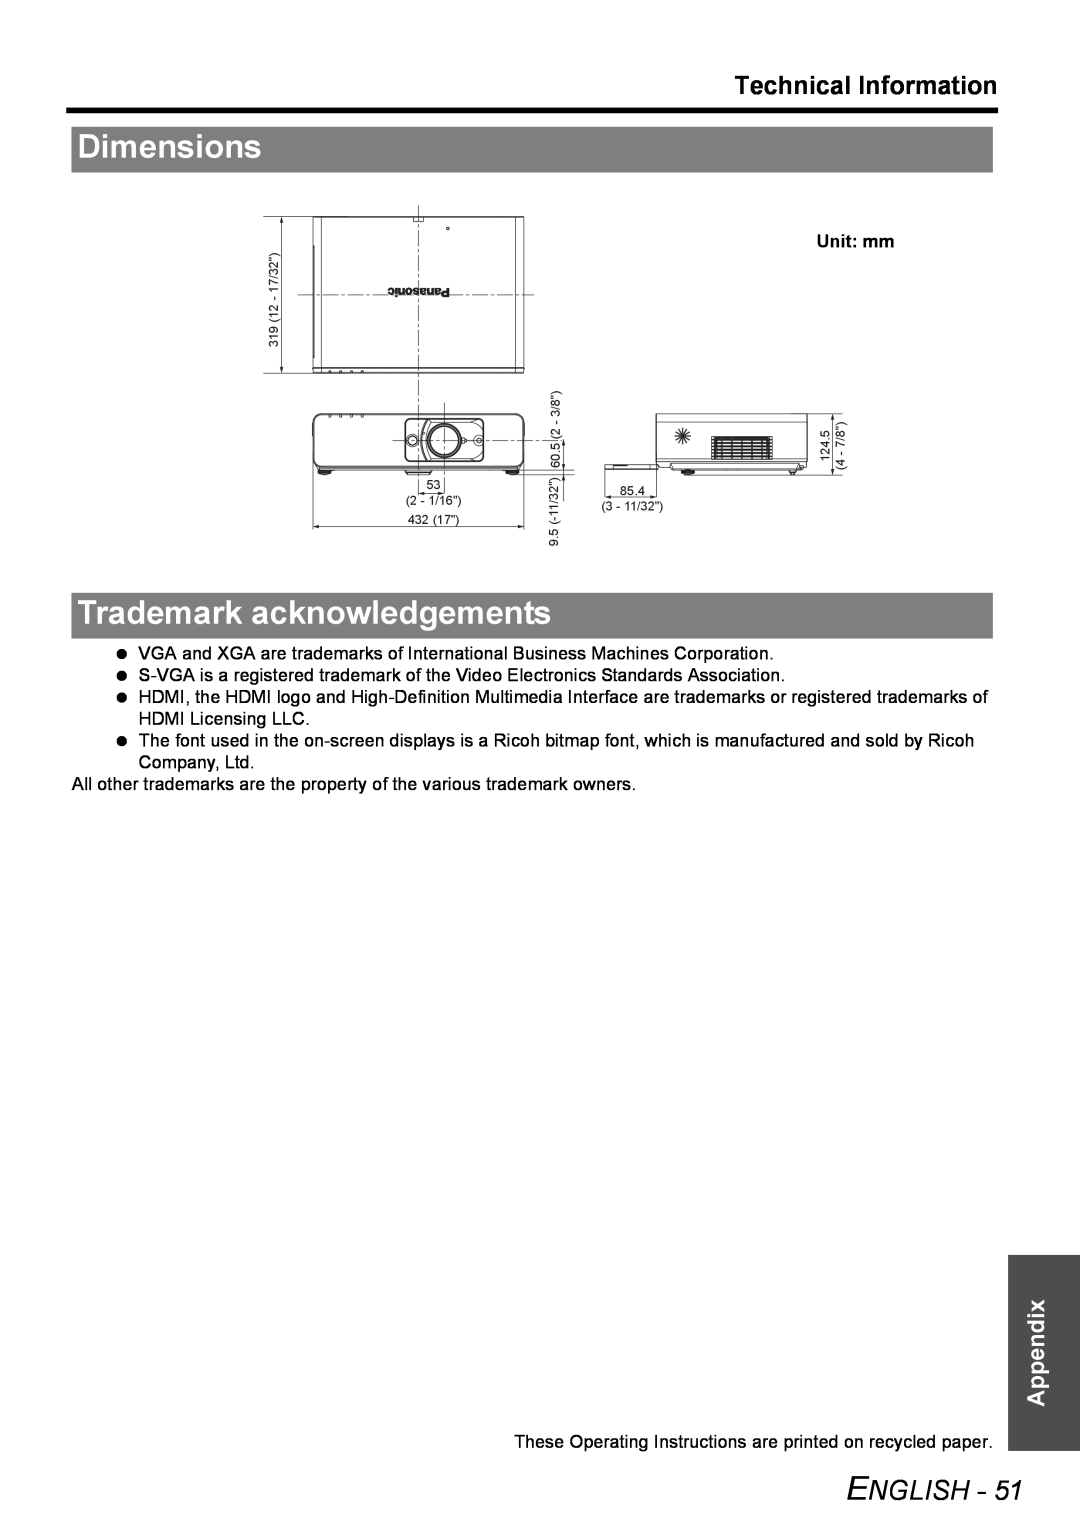 Philips PT-FW100NTU manual Dimensions, Trademark acknowledgements, English, Technical Information, Appendix 